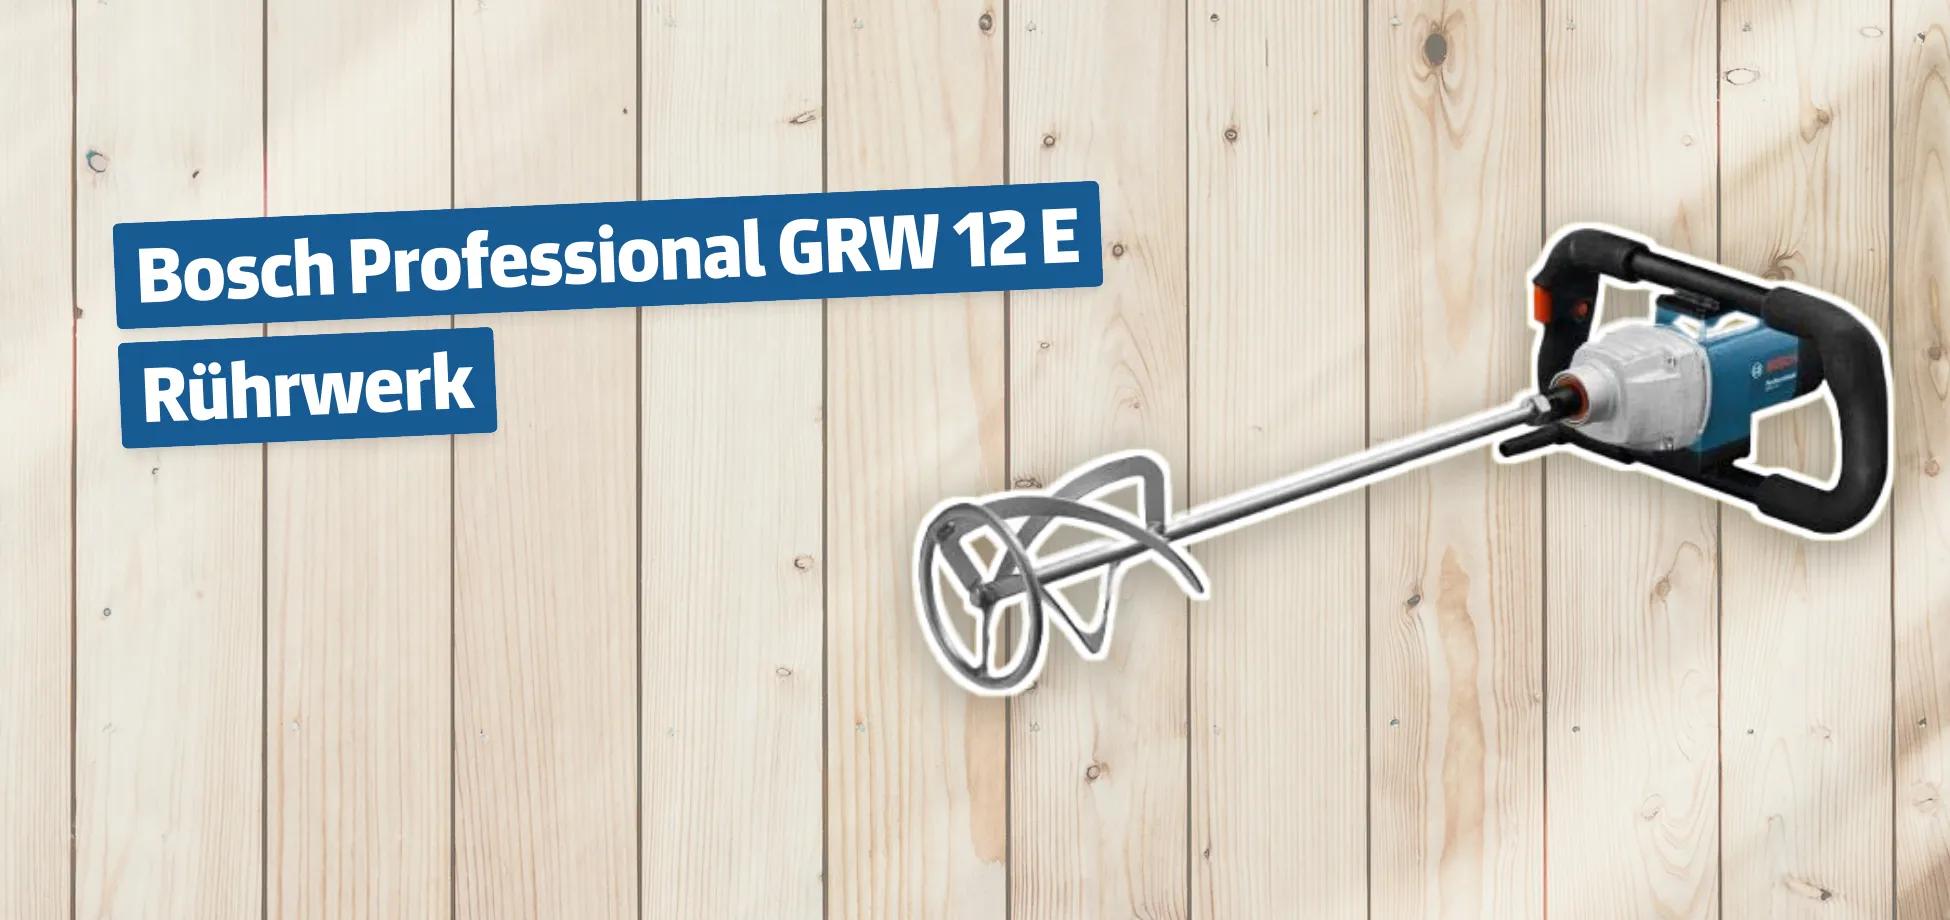 Bosch Professional GRW 12 E Rührwerk